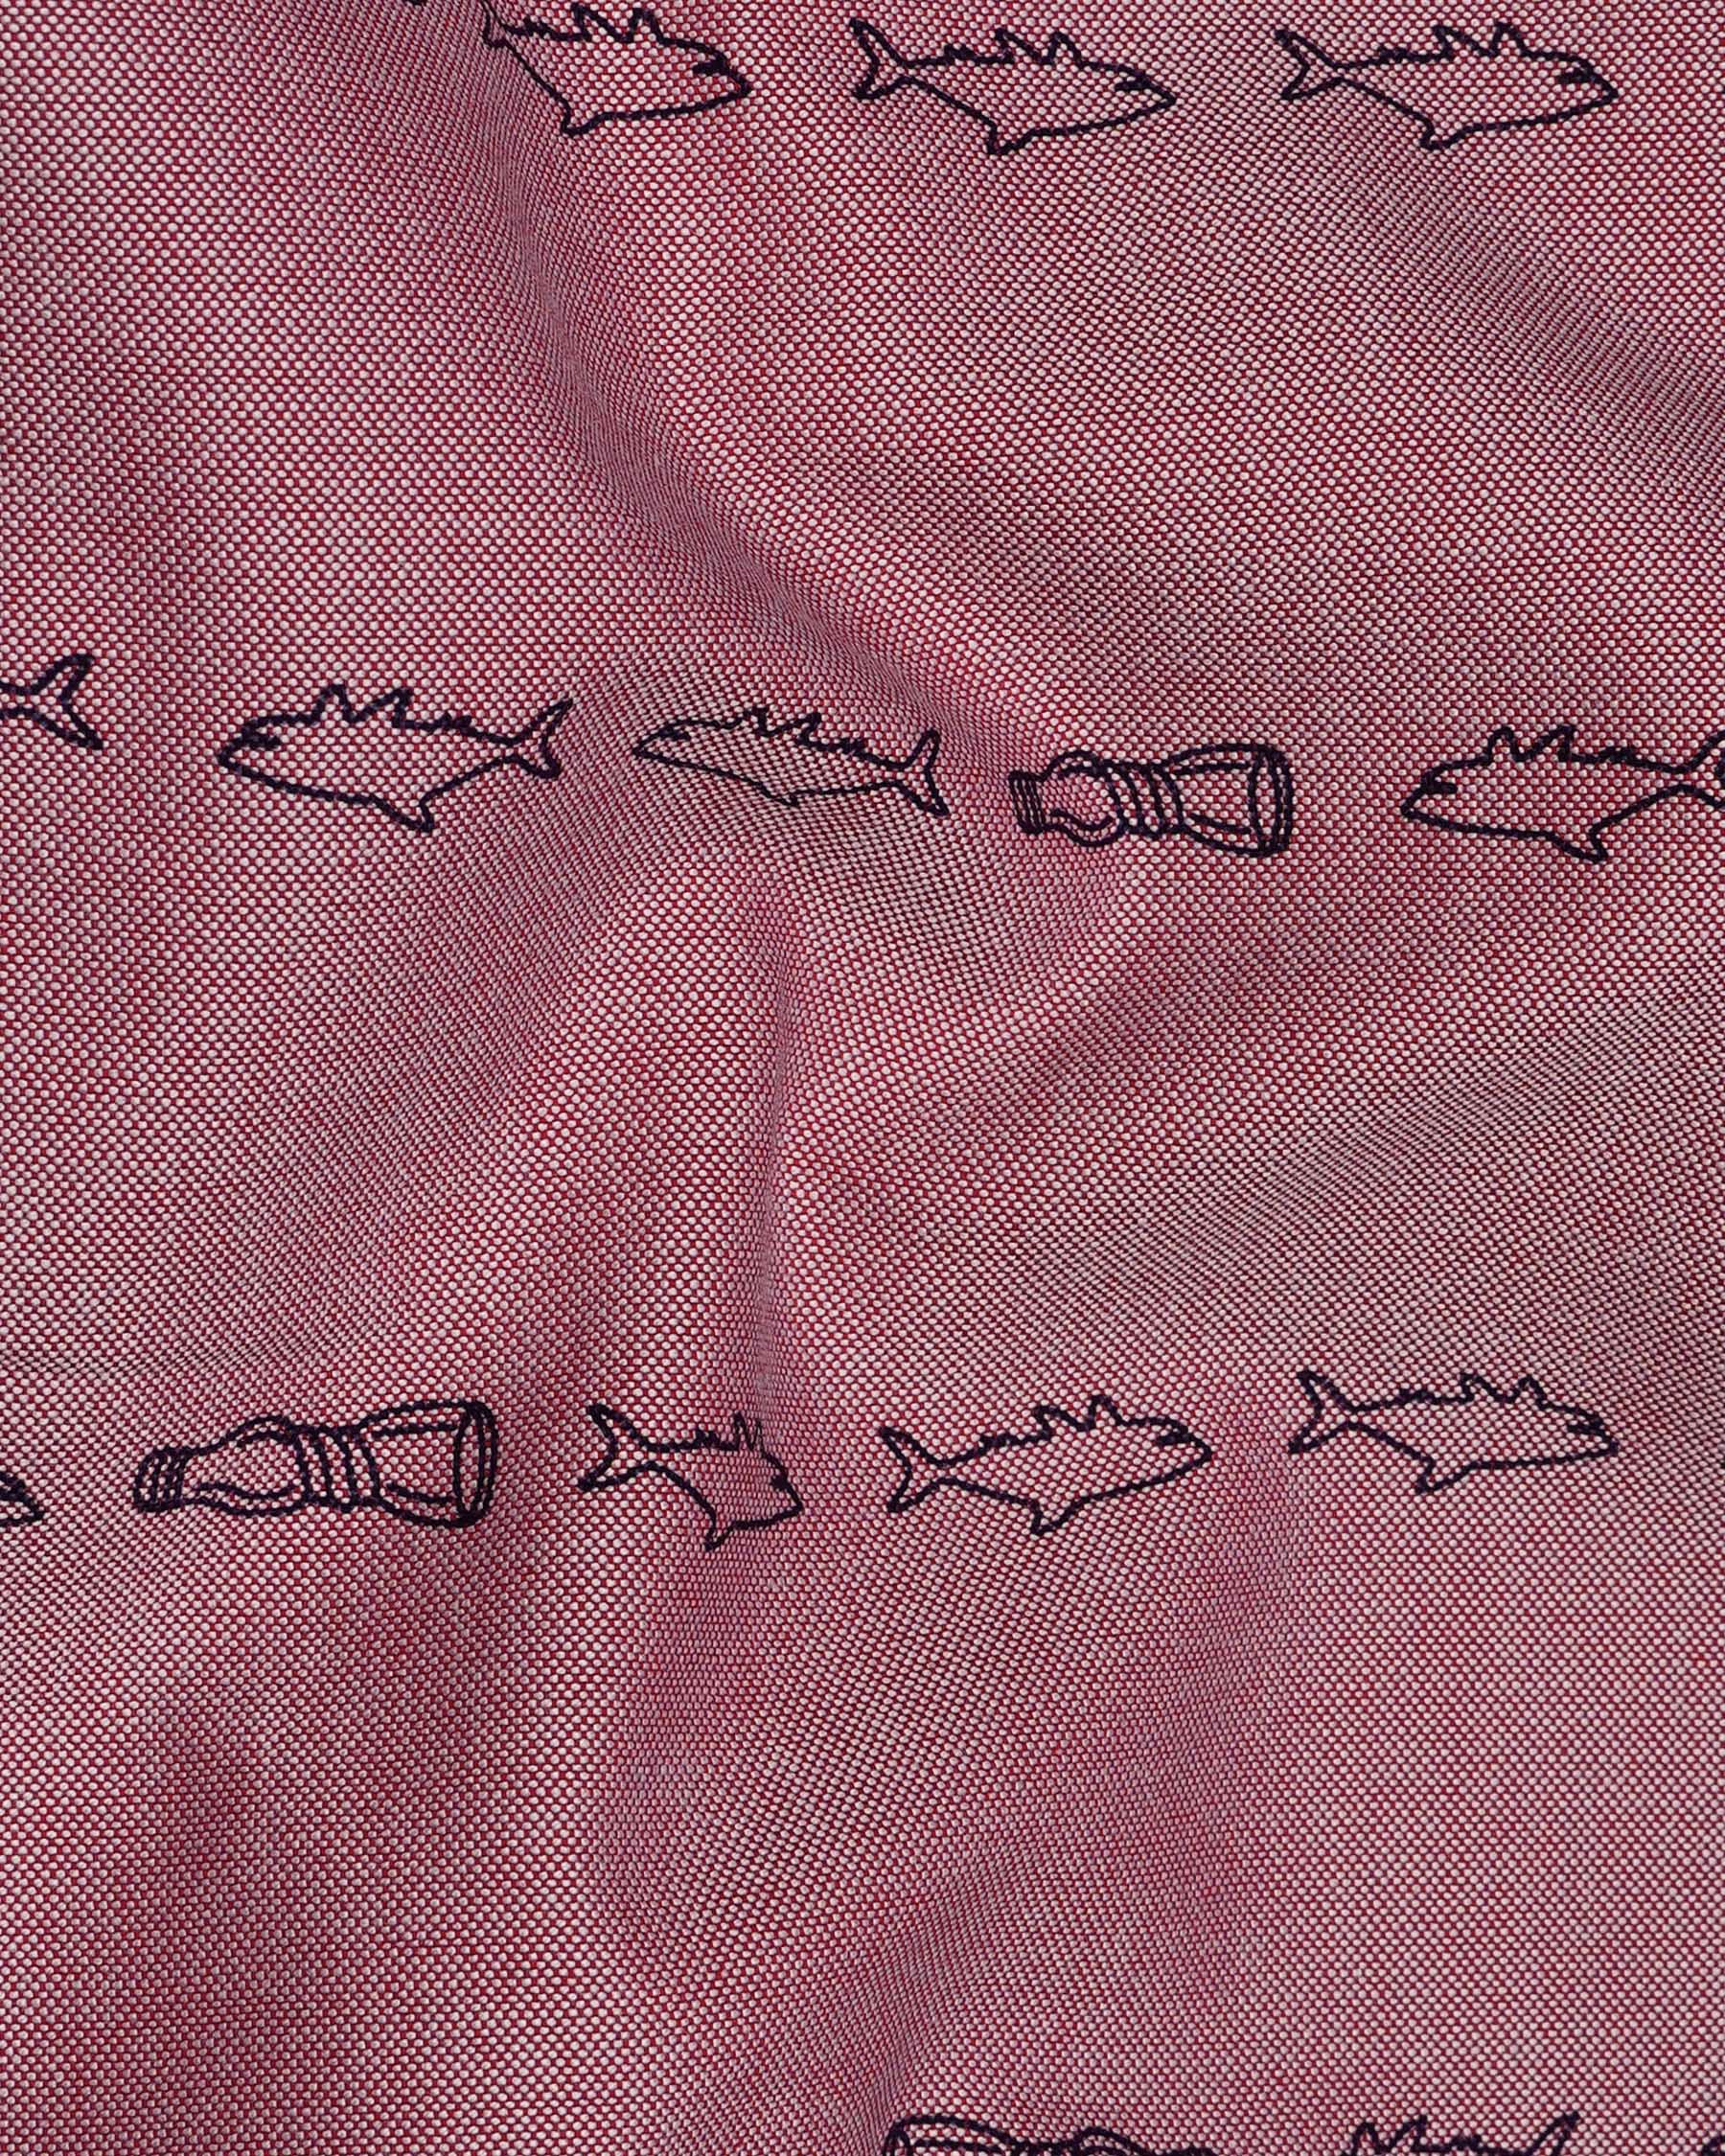 Falcon Pink With Navy Blue Fish Printed Royal Oxford Shirt 7896-BD-BLK-38, 7896-BD-BLK-H-38, 7896-BD-BLK-39, 7896-BD-BLK-H-39, 7896-BD-BLK-40, 7896-BD-BLK-H-40, 7896-BD-BLK-42, 7896-BD-BLK-H-42, 7896-BD-BLK-44, 7896-BD-BLK-H-44, 7896-BD-BLK-46, 7896-BD-BLK-H-46, 7896-BD-BLK-48, 7896-BD-BLK-H-48, 7896-BD-BLK-50, 7896-BD-BLK-H-50, 7896-BD-BLK-52, 7896-BD-BLK-H-52